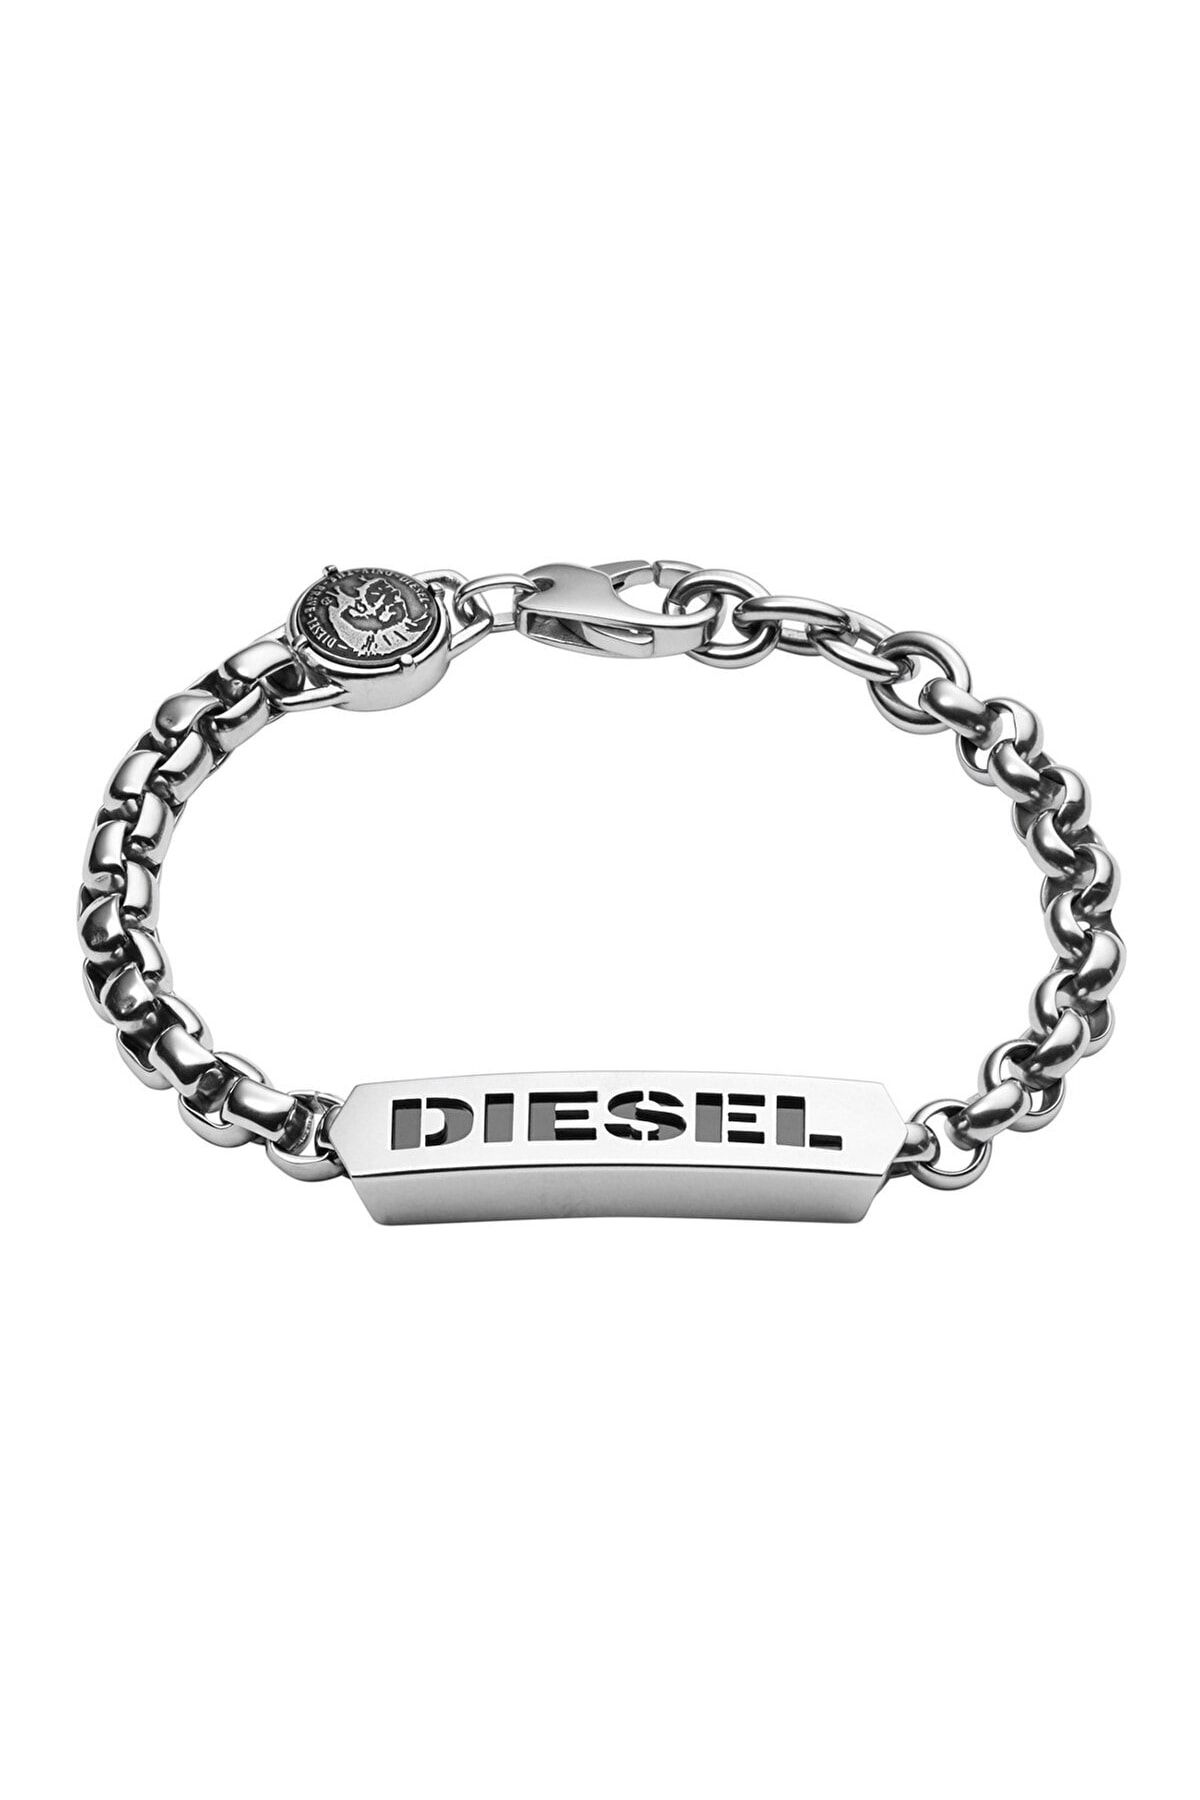 Diesel Djdx0993-040 Erkek Bileklik